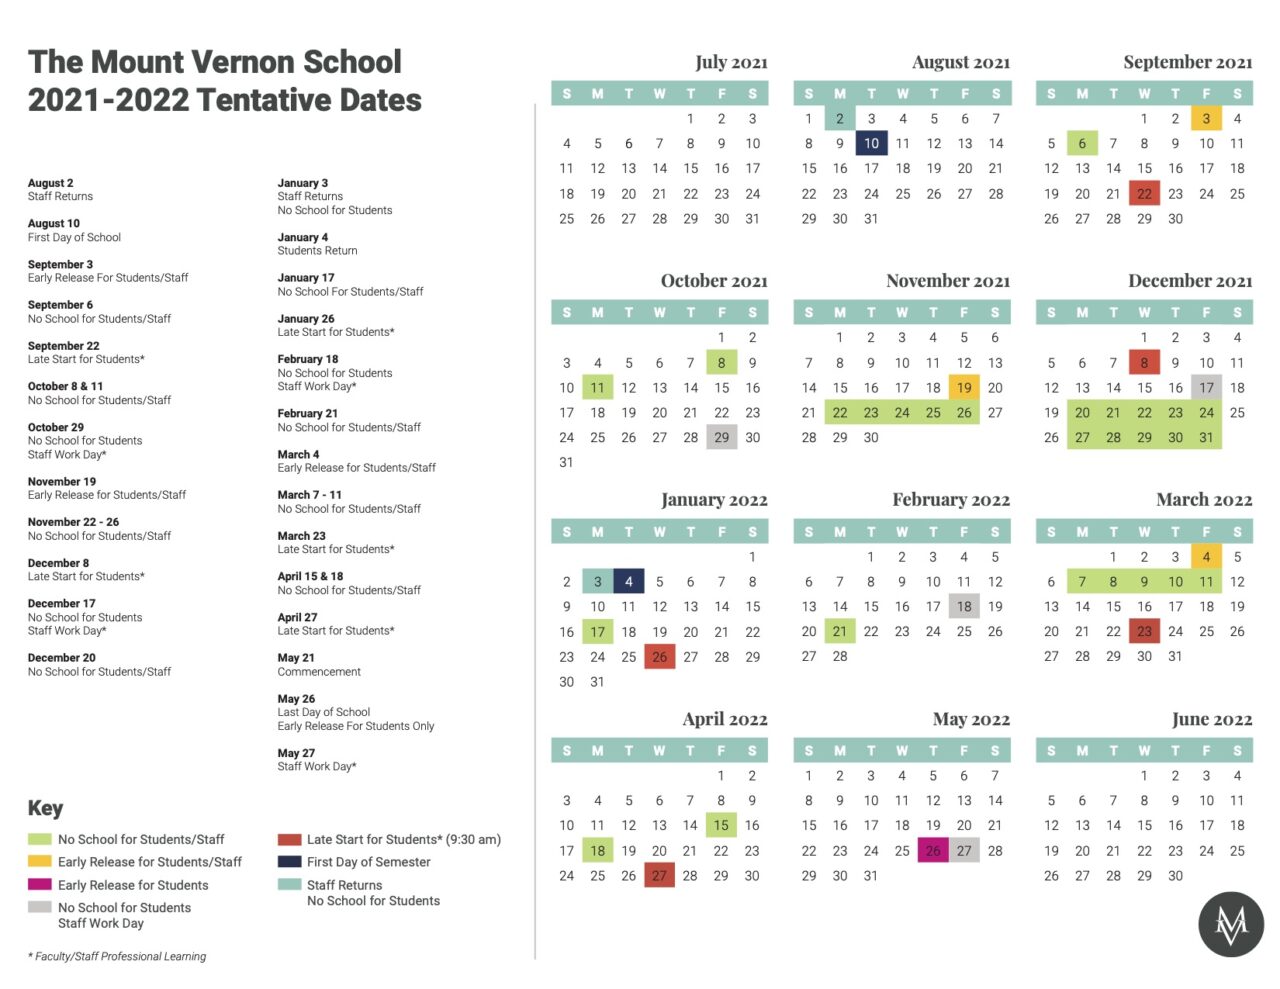 Key Calendar Dates 2021-2022 - Mount Vernon School